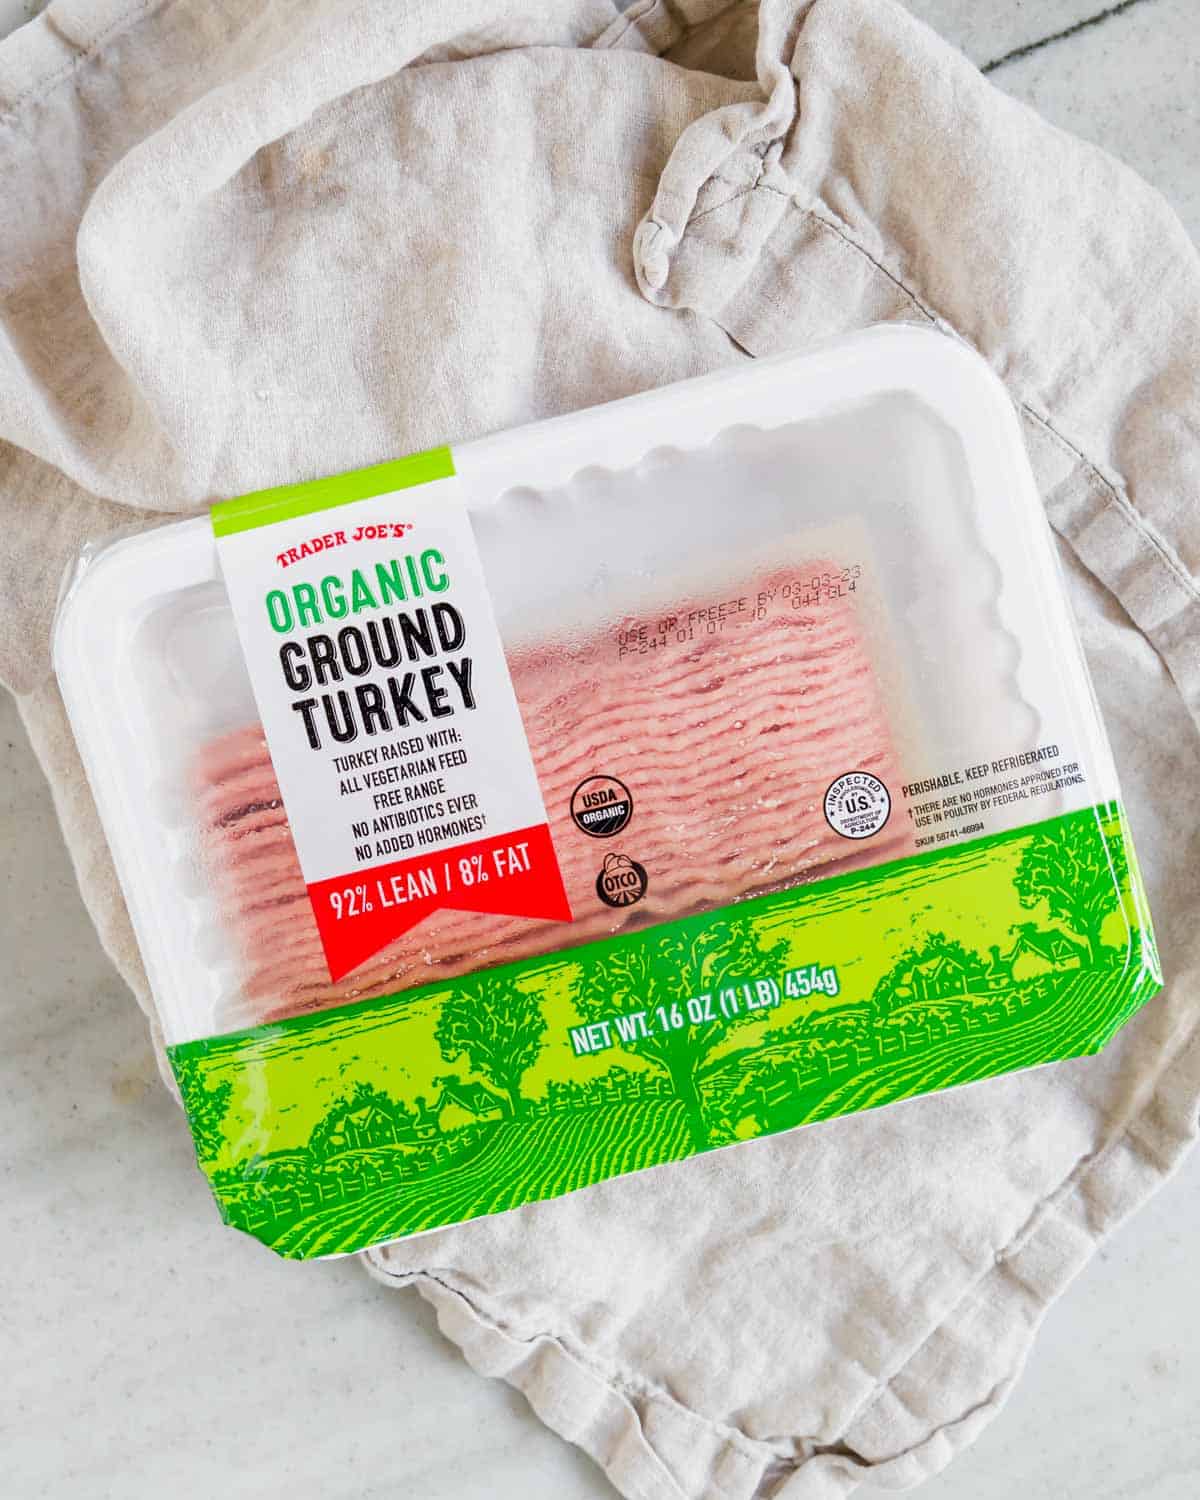 Package of Trader Joe's organic ground turkey.